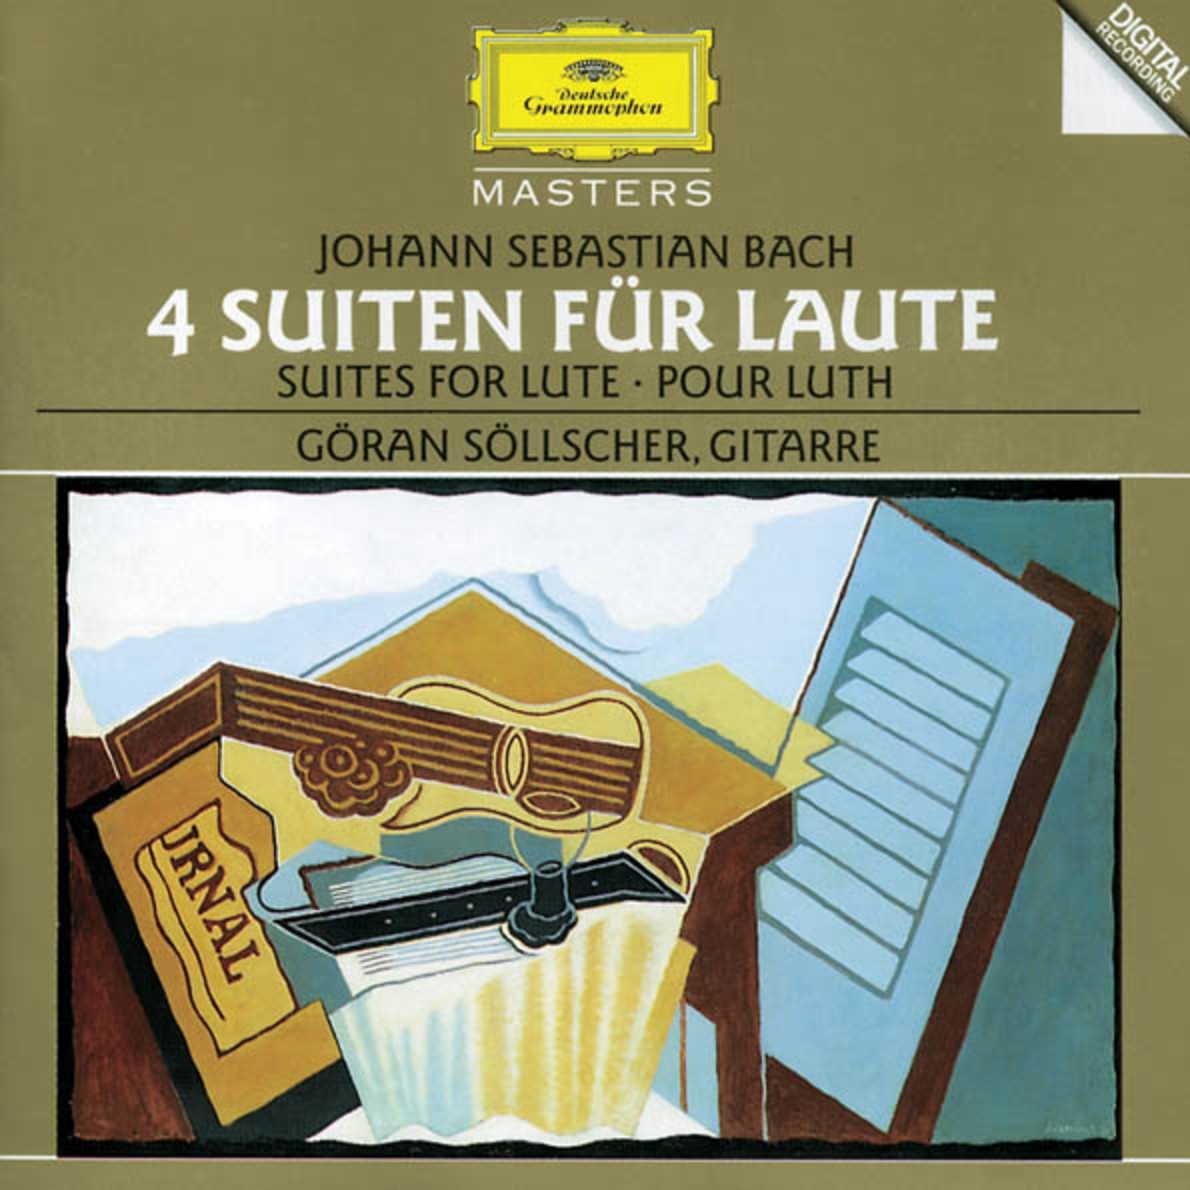 Suite in G minor, BWV 995 - Gavotte I-II en Rondeau